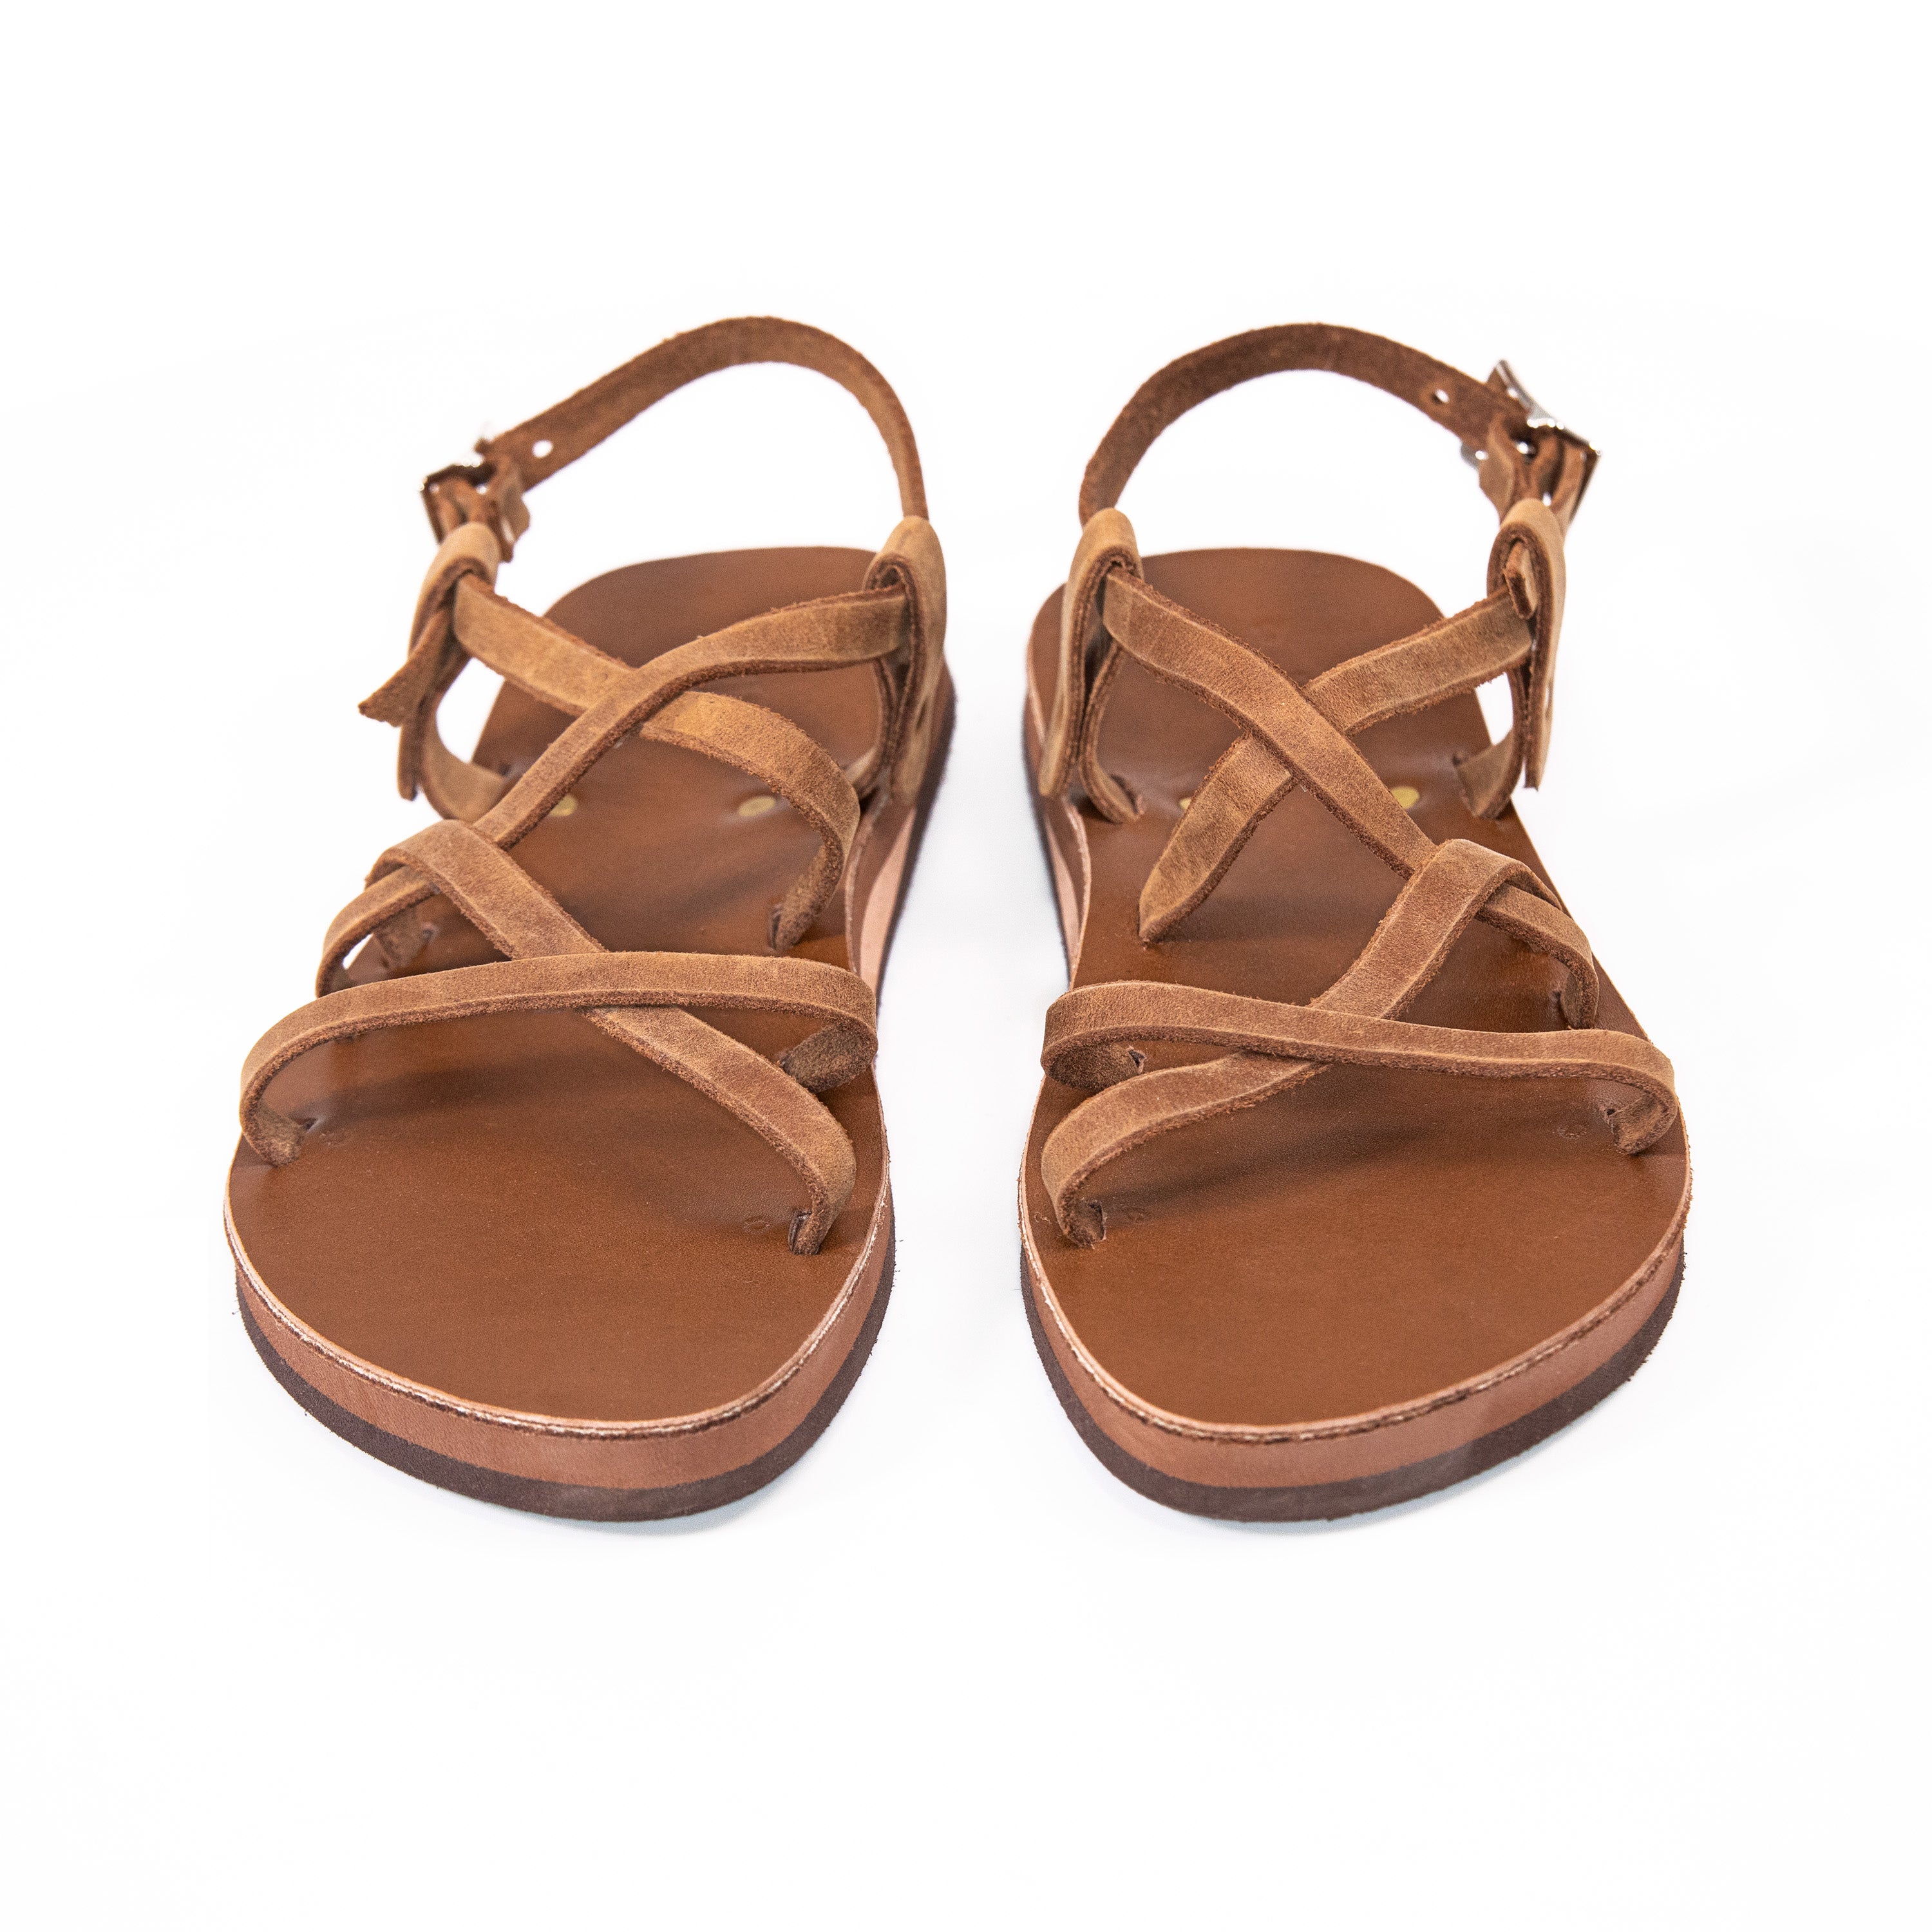 Strap leather sandals brown - CH Carolina Herrera Finland